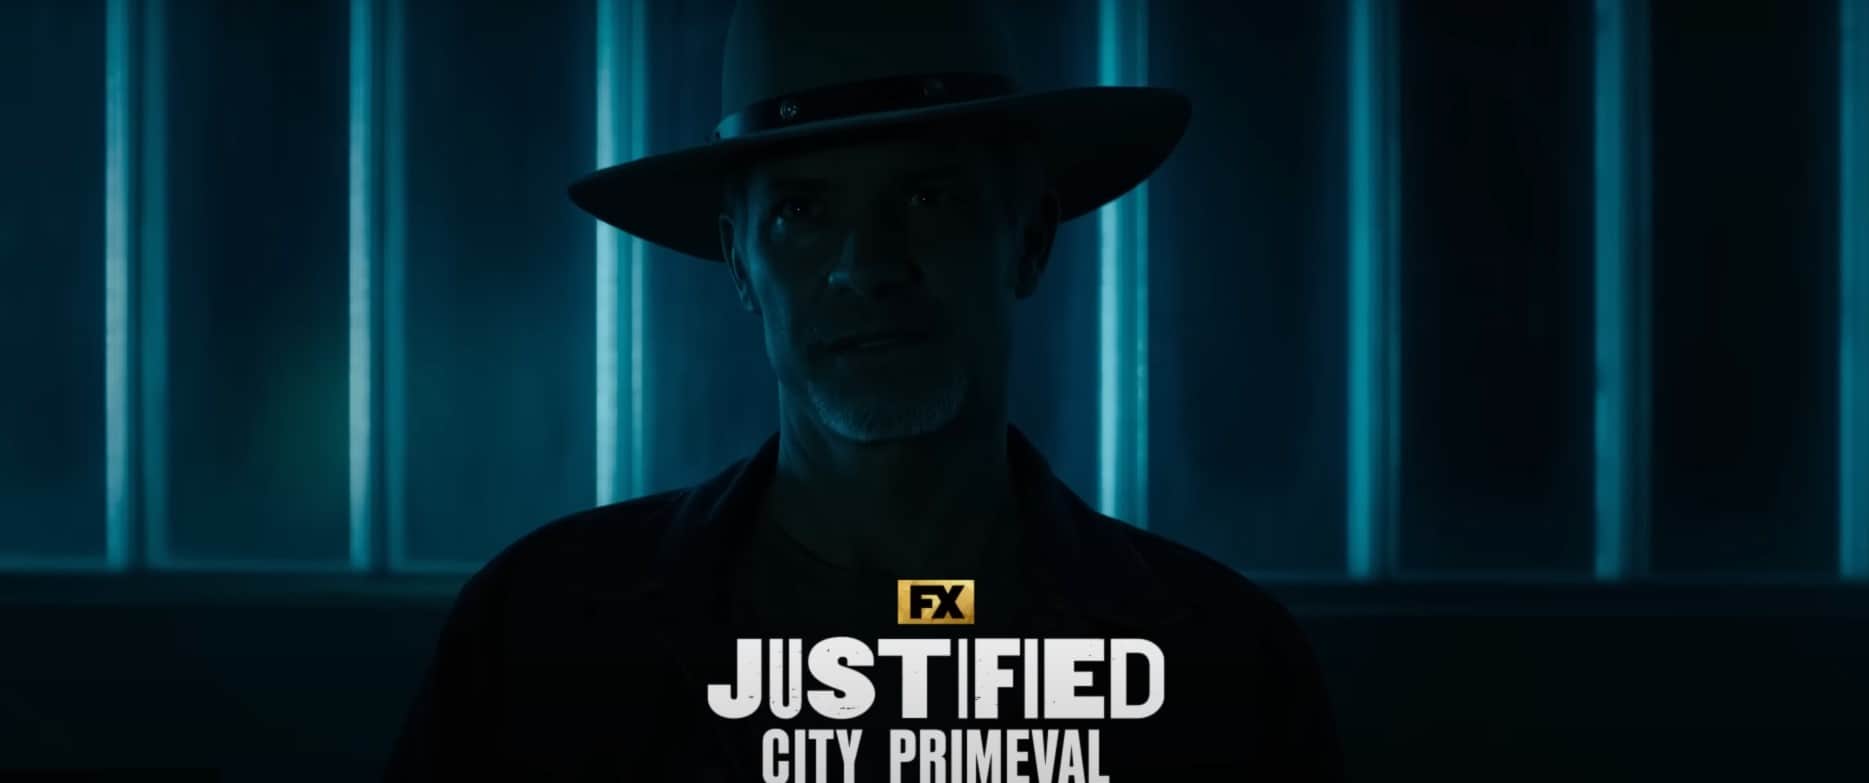 Justified: City Primeval Episode 1 & 2